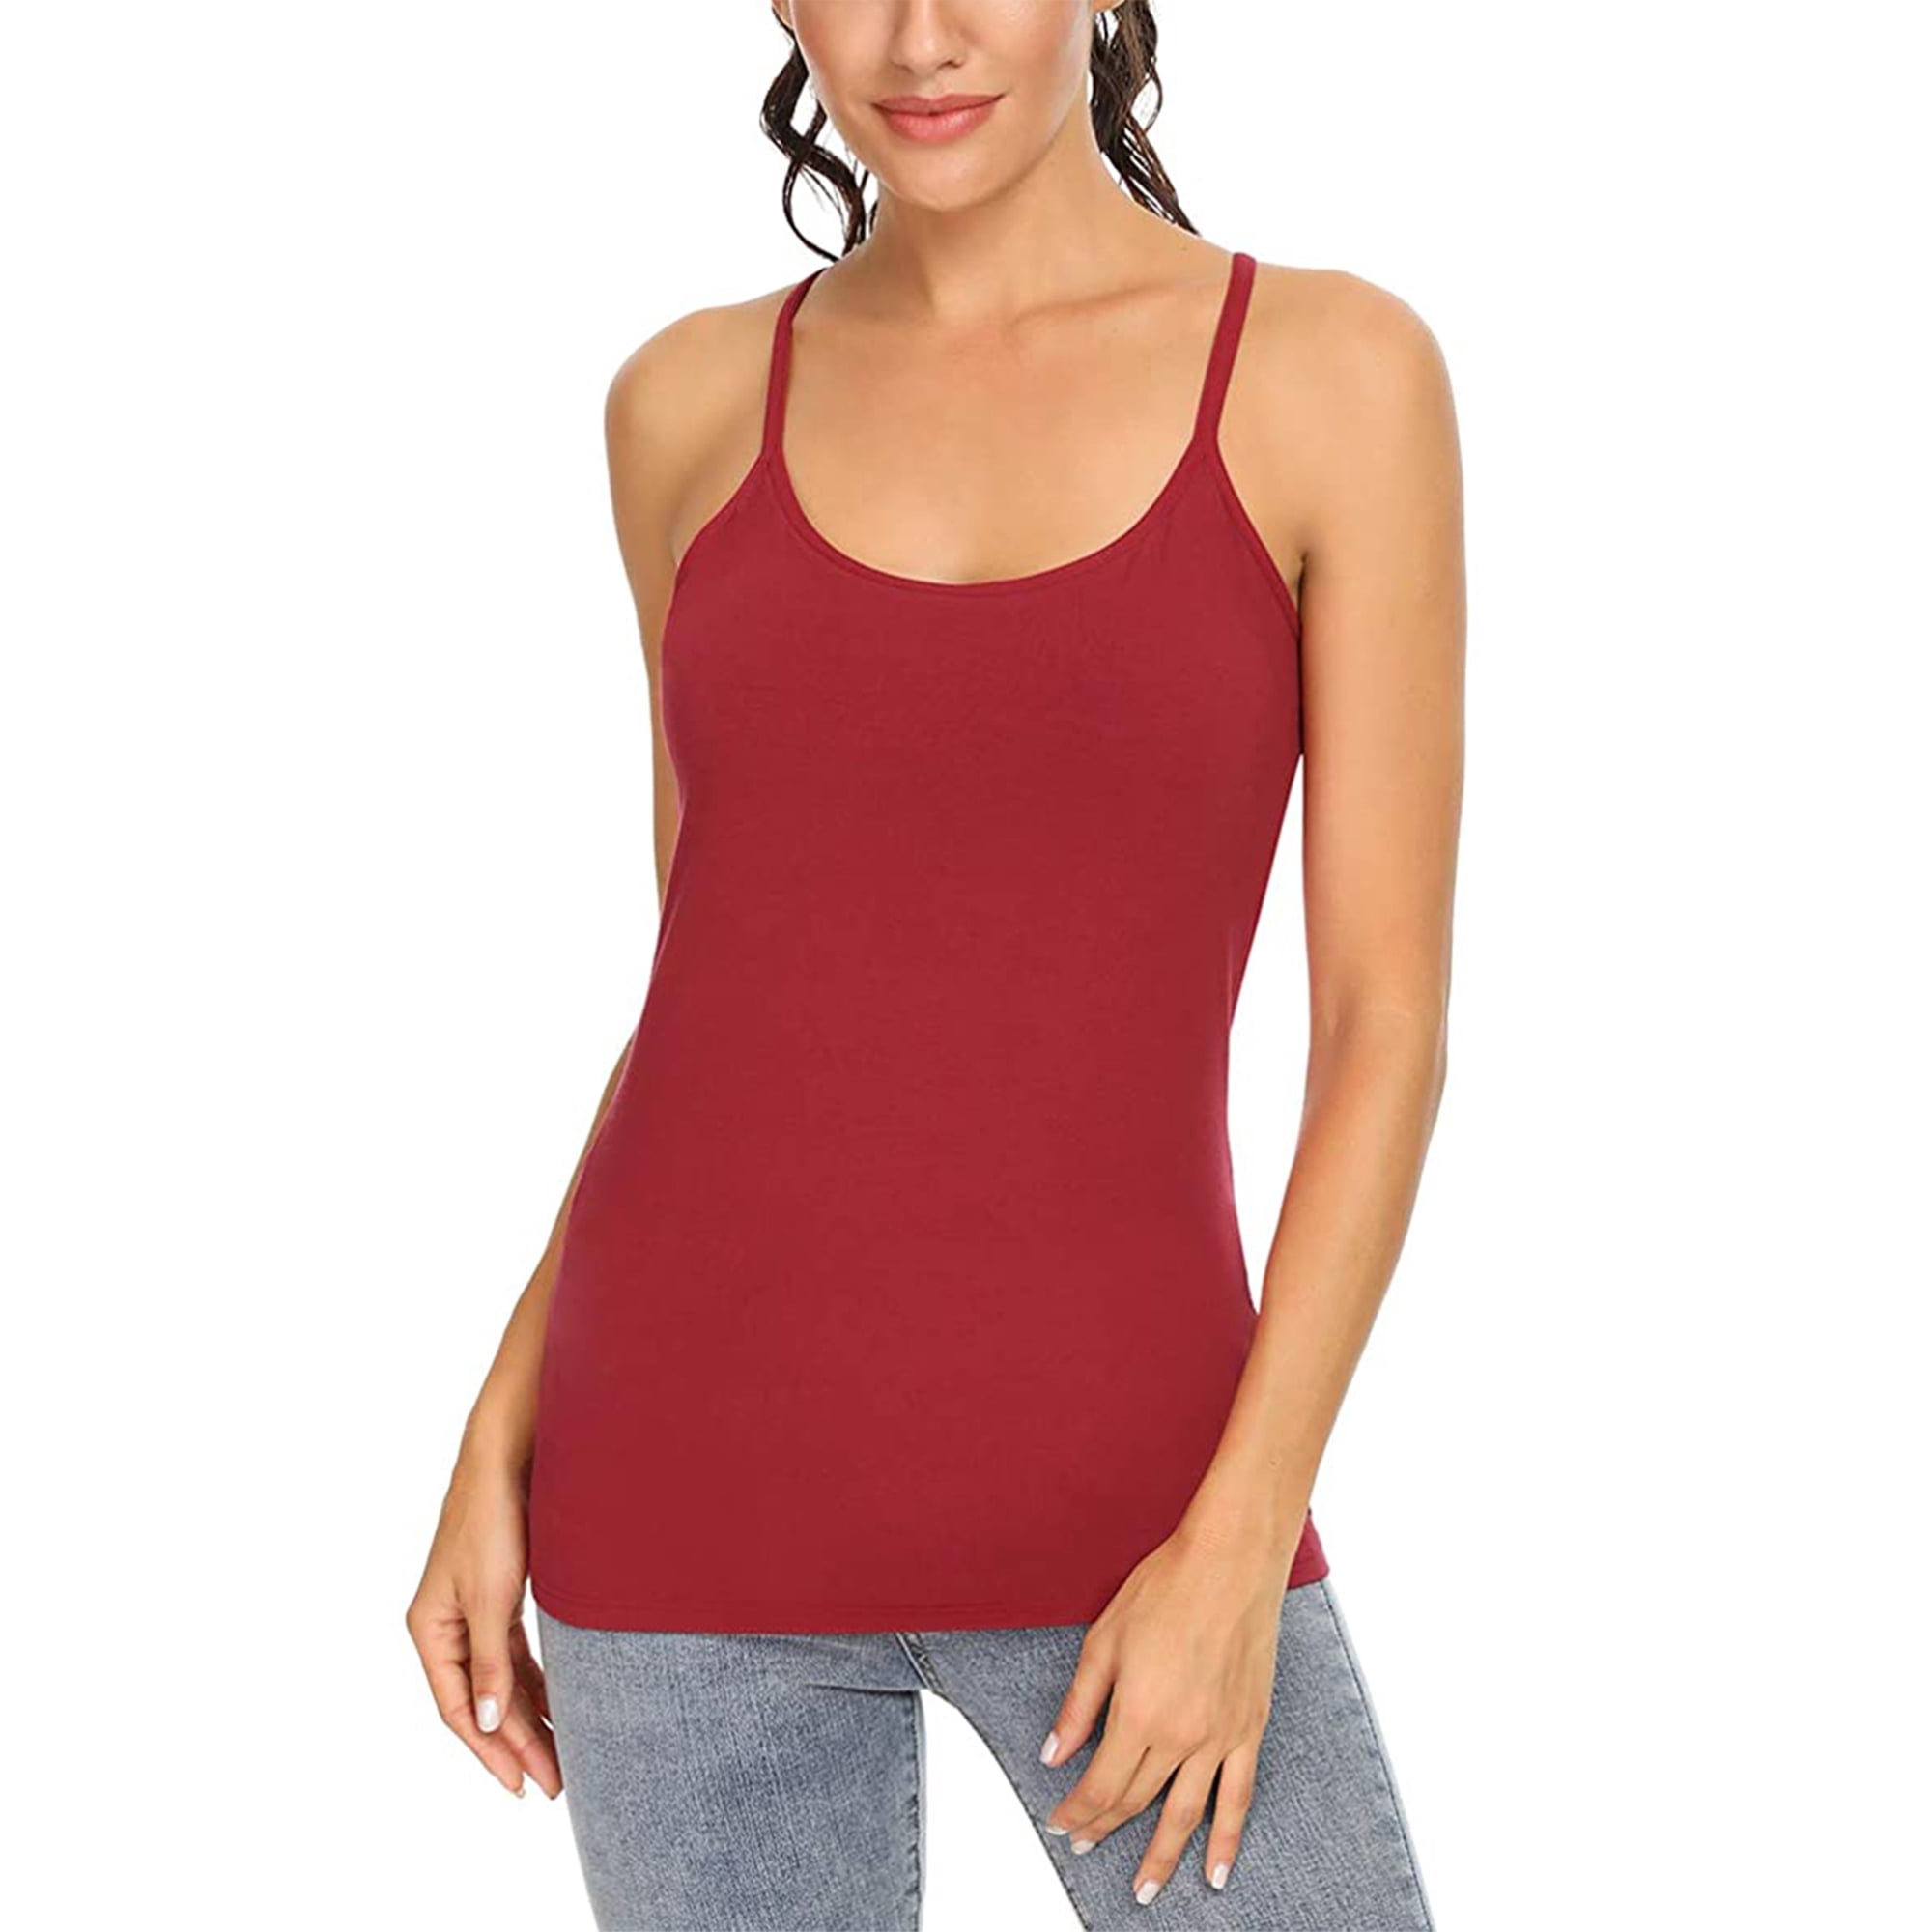 Txlixc - Camiseta sin mangas básica para mujer, con tirantes finos